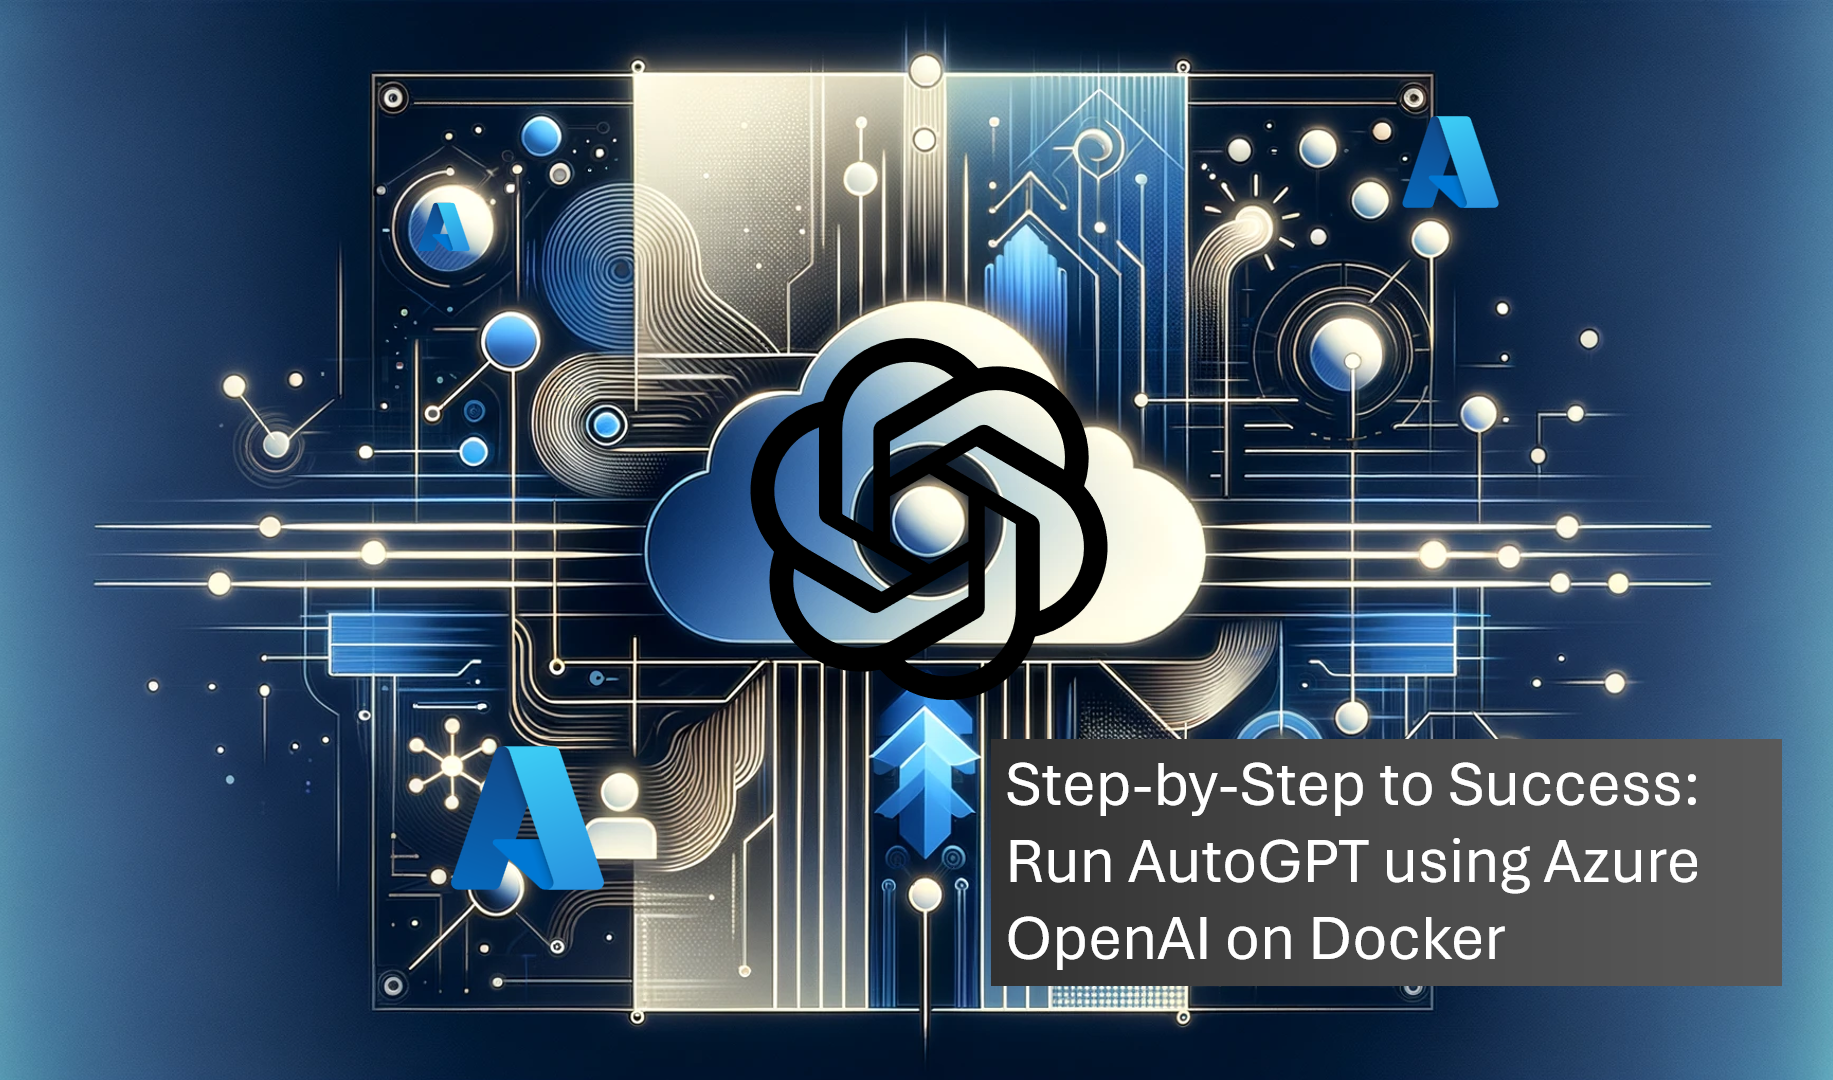 Step-by-Step to Success: Run AutoGPT using Azure OpenAI on Docker